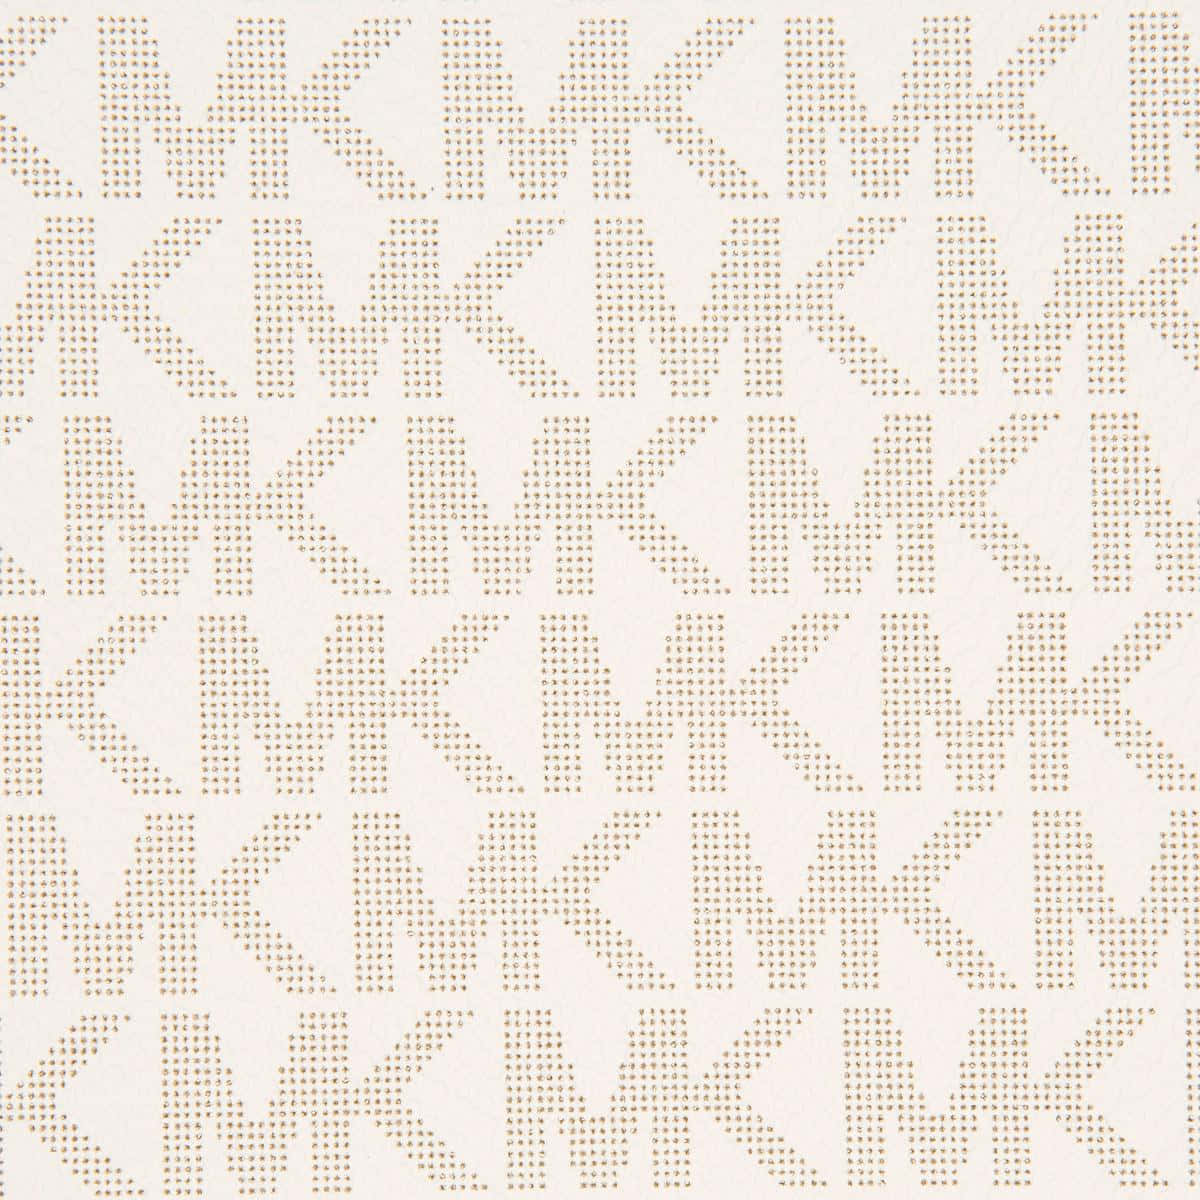 Michael Kors Wallpapers - Top Free Michael Kors Backgrounds -  WallpaperAccess